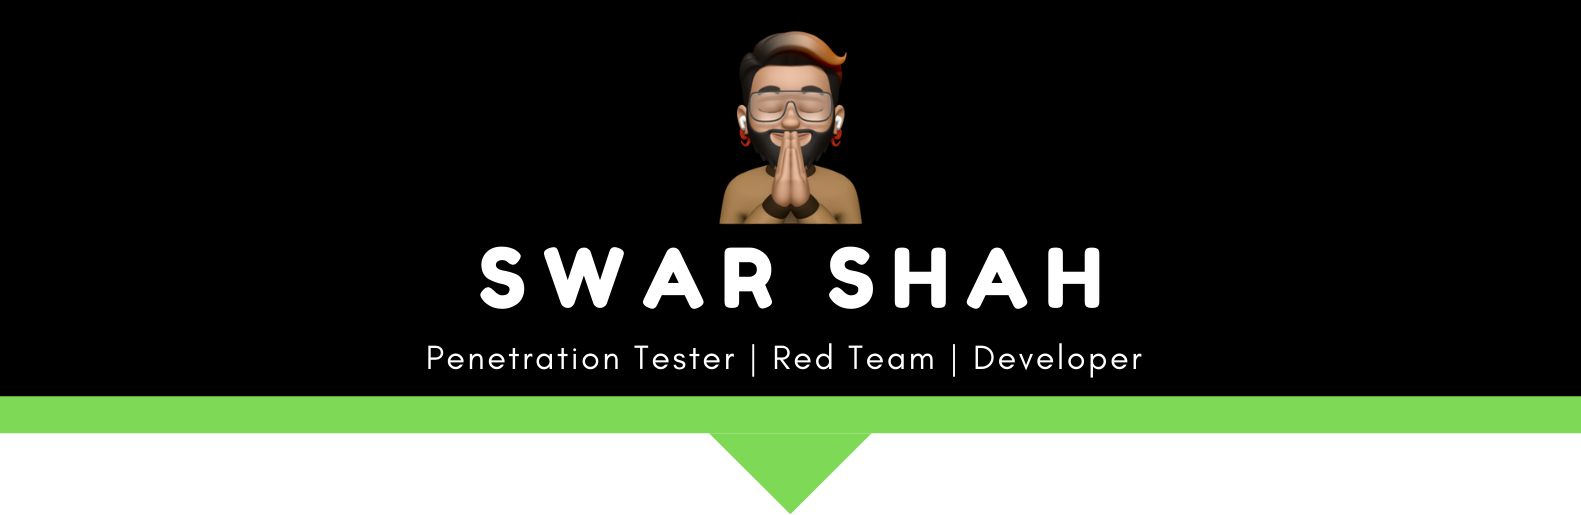 banner that says Swar Shah - Penetration Tester, Synack Red Team, Developer.